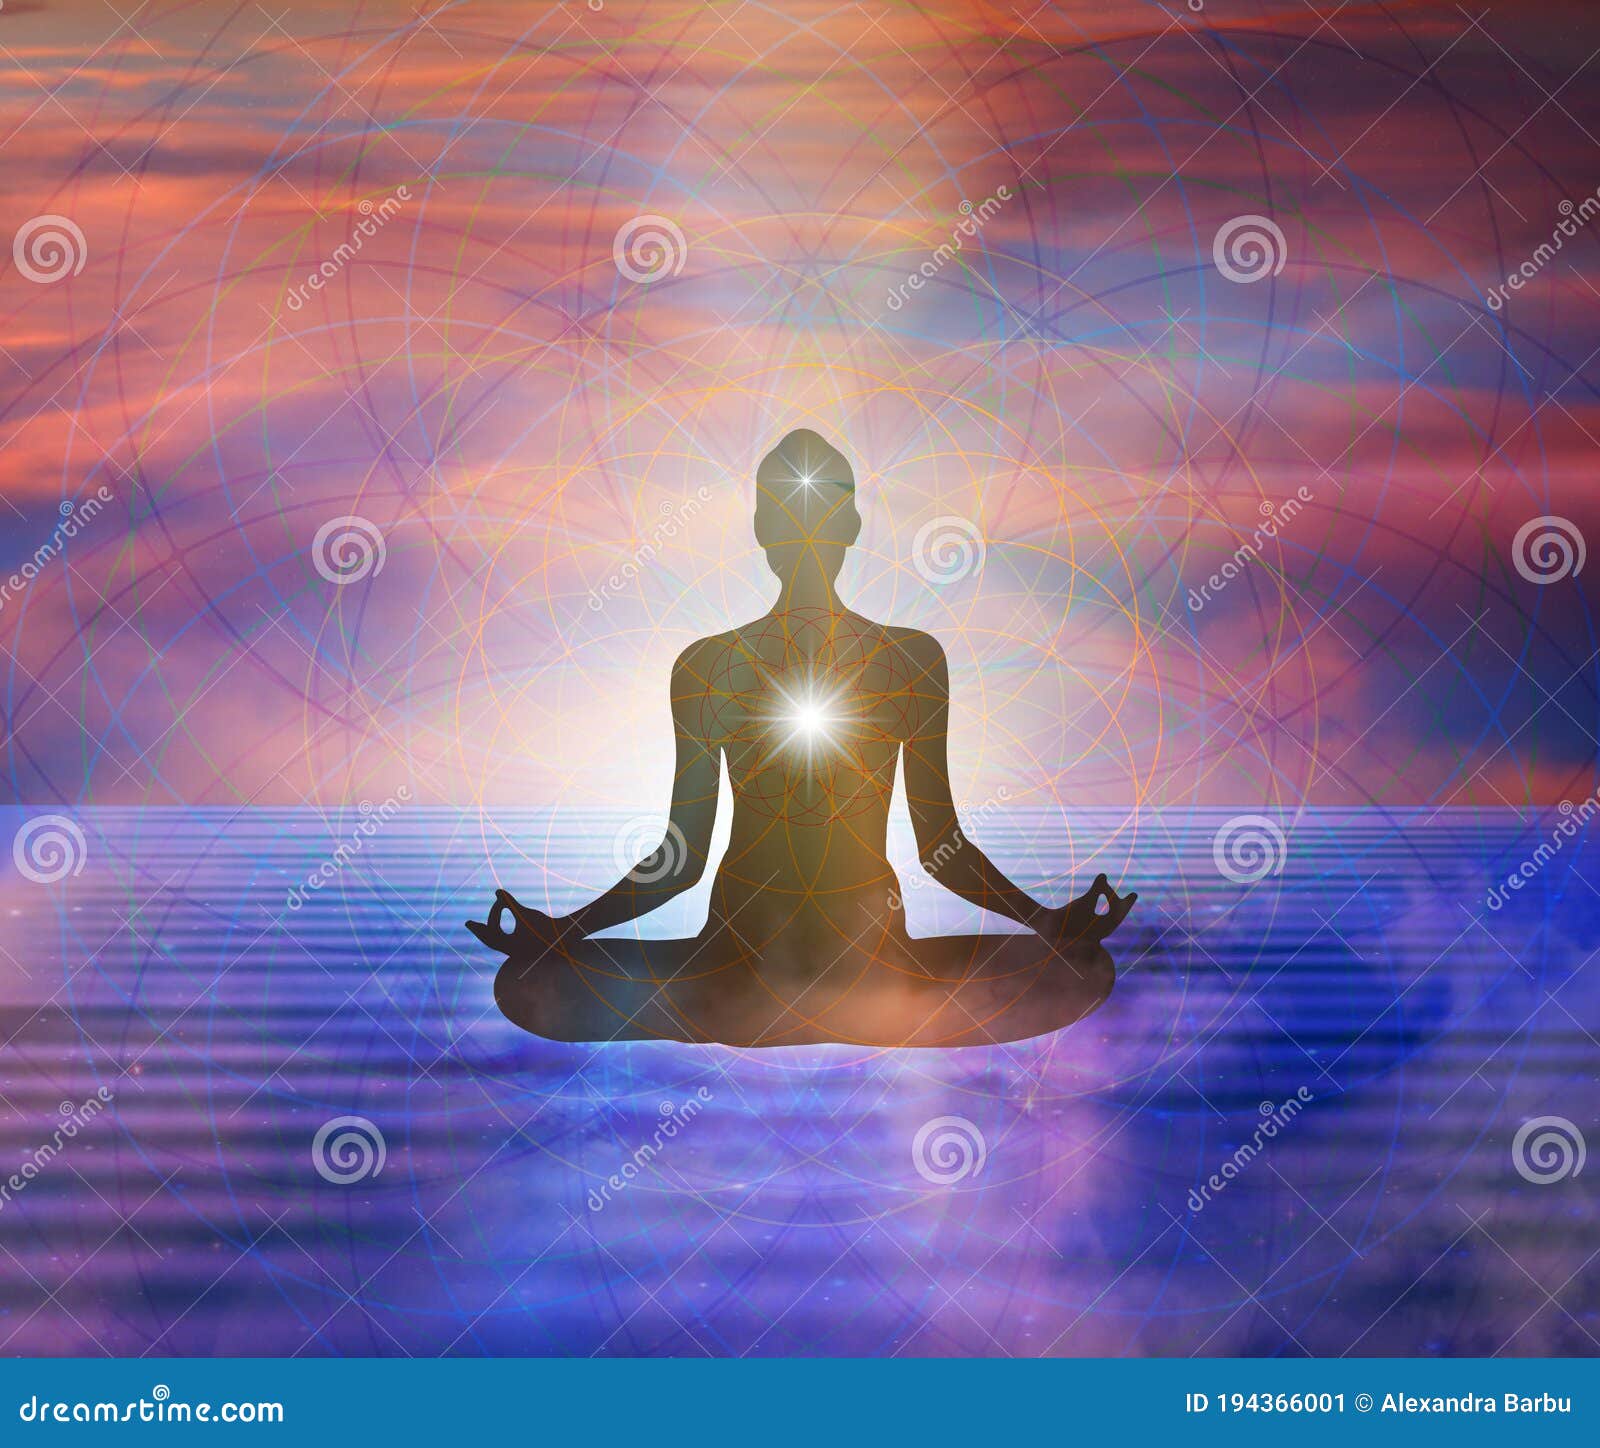 spiritual energy healing power, connection, conscience awakening, meditation, expansion